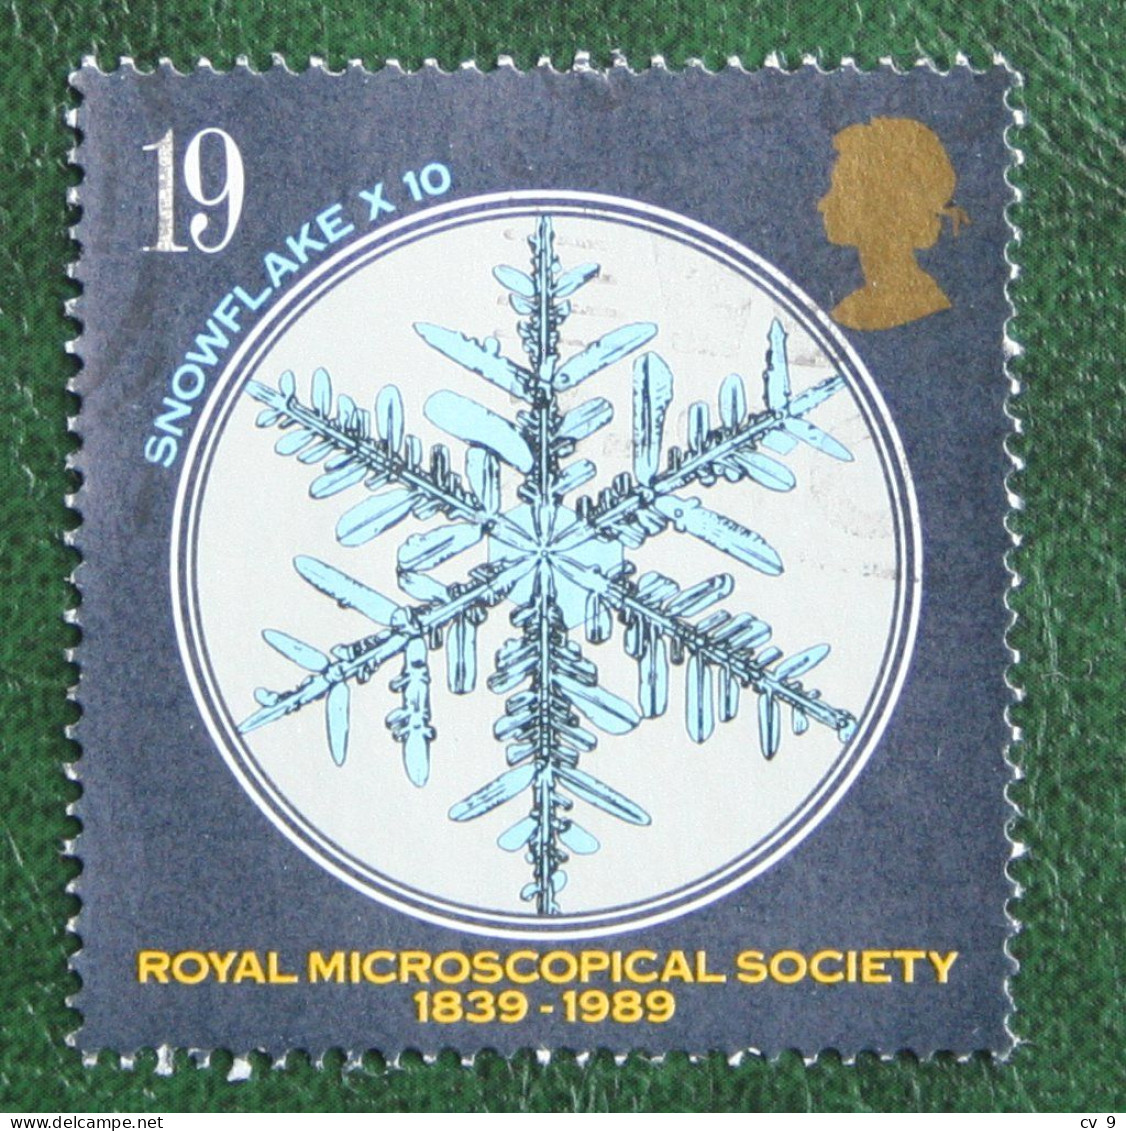 Royal Microscopical Society RMS Mi (1218 1221) 1989 Used Gebruikt Oblitere ENGLAND GRANDE-BRETAGNE GB GREAT BRITAIN - Gebraucht